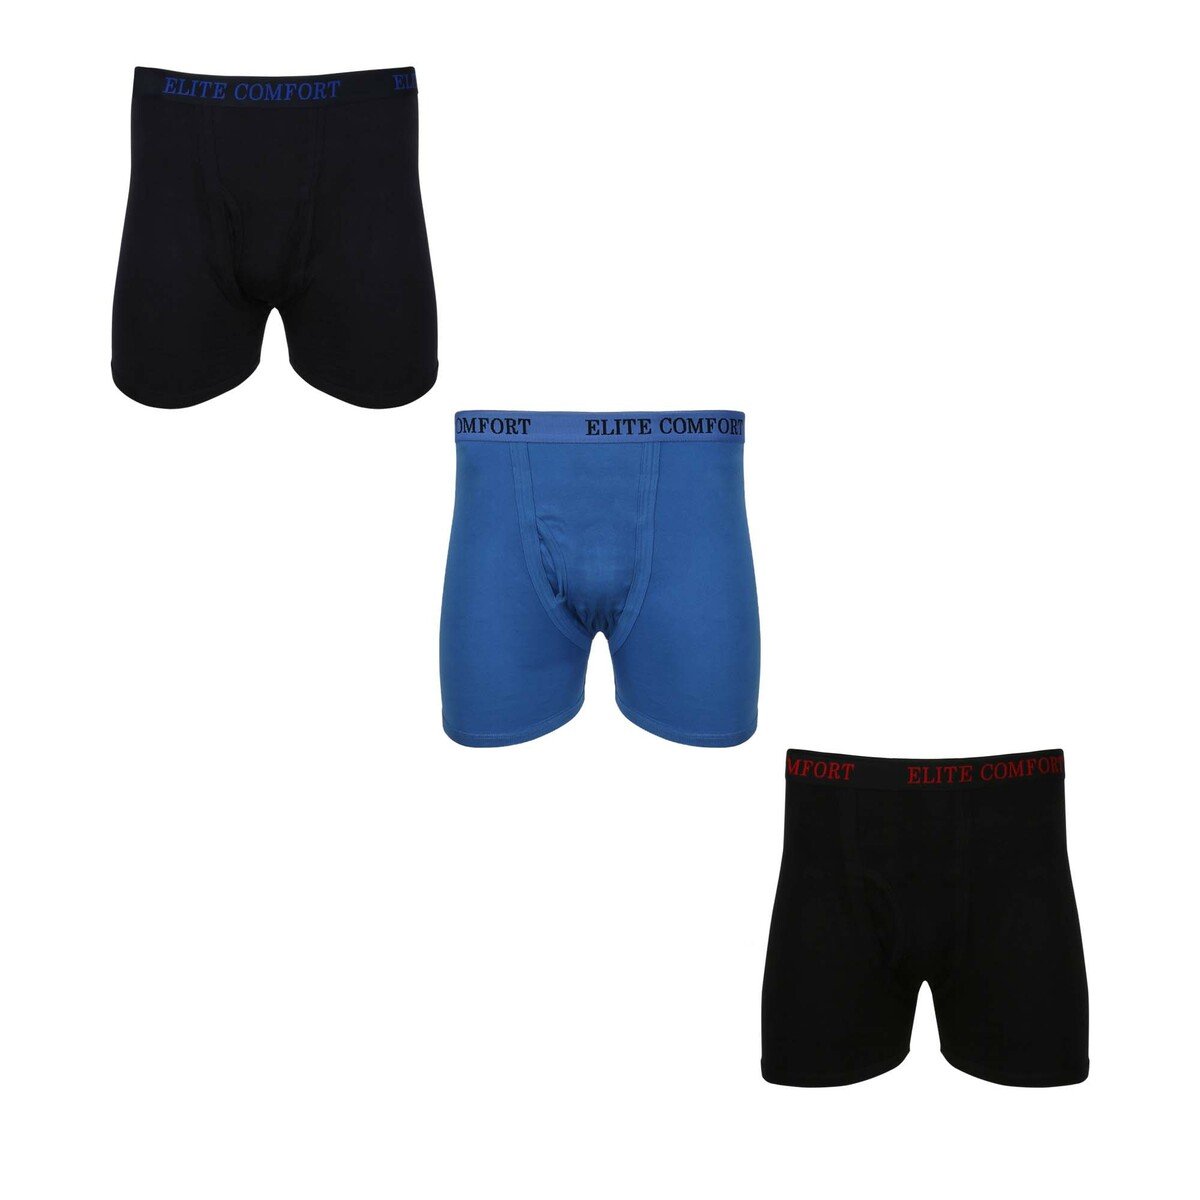 Elite Comfort Men's Under Shorts Assorted Colors 3 Pcs Pack Extra Large